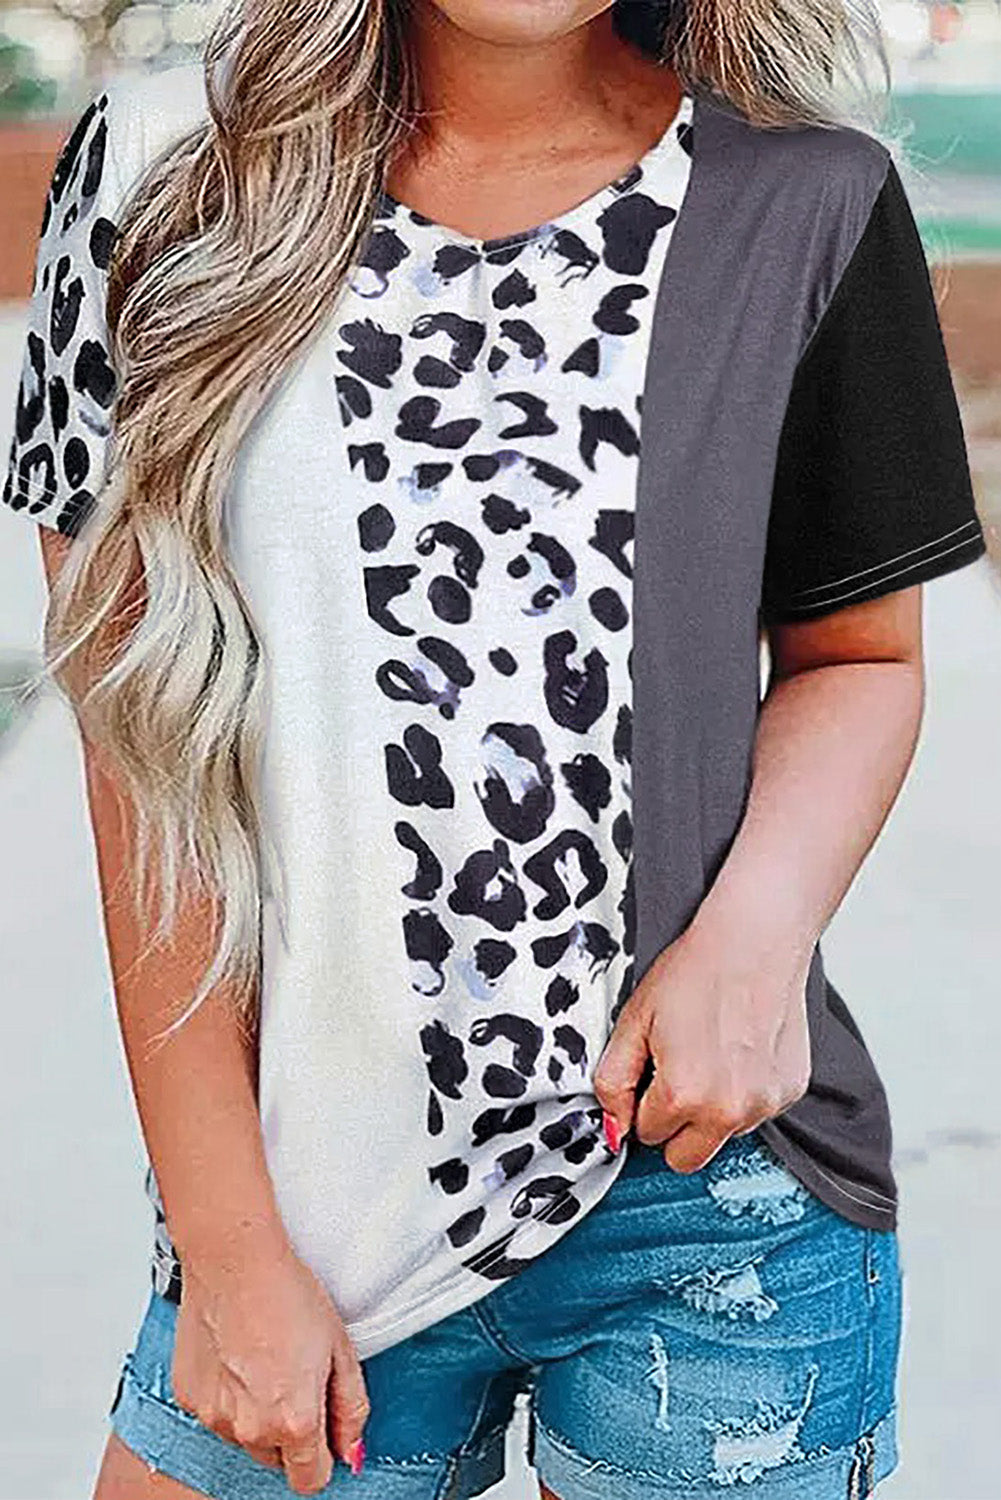 Leopard Color Block Short Sleeve Top